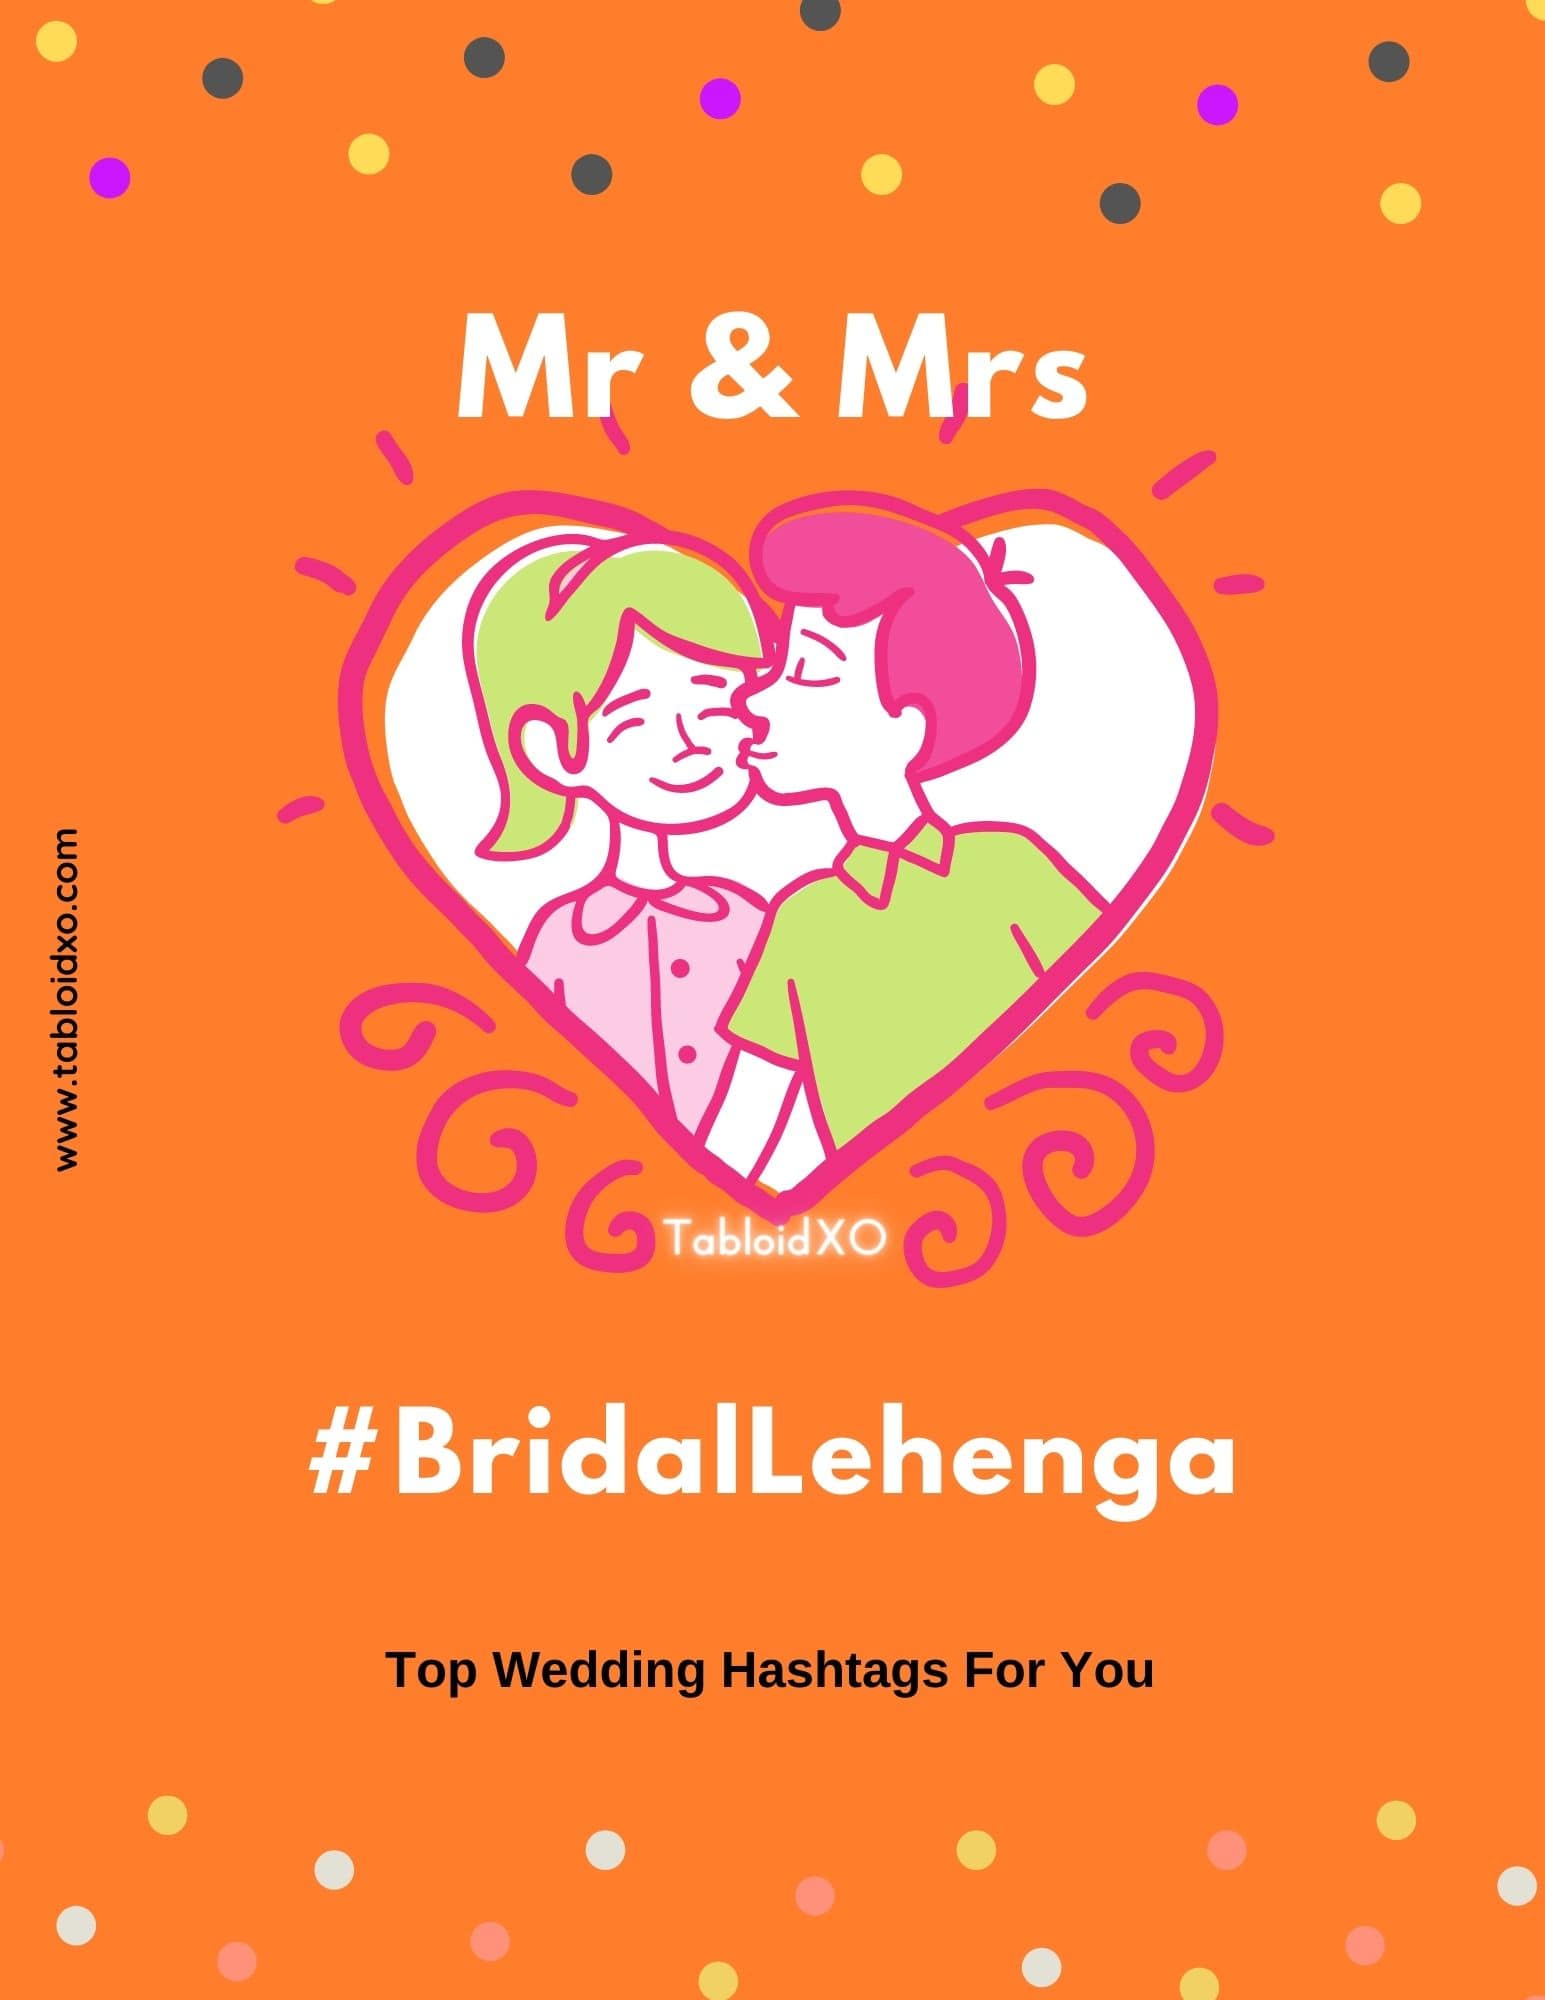 Indian wedding hashtags